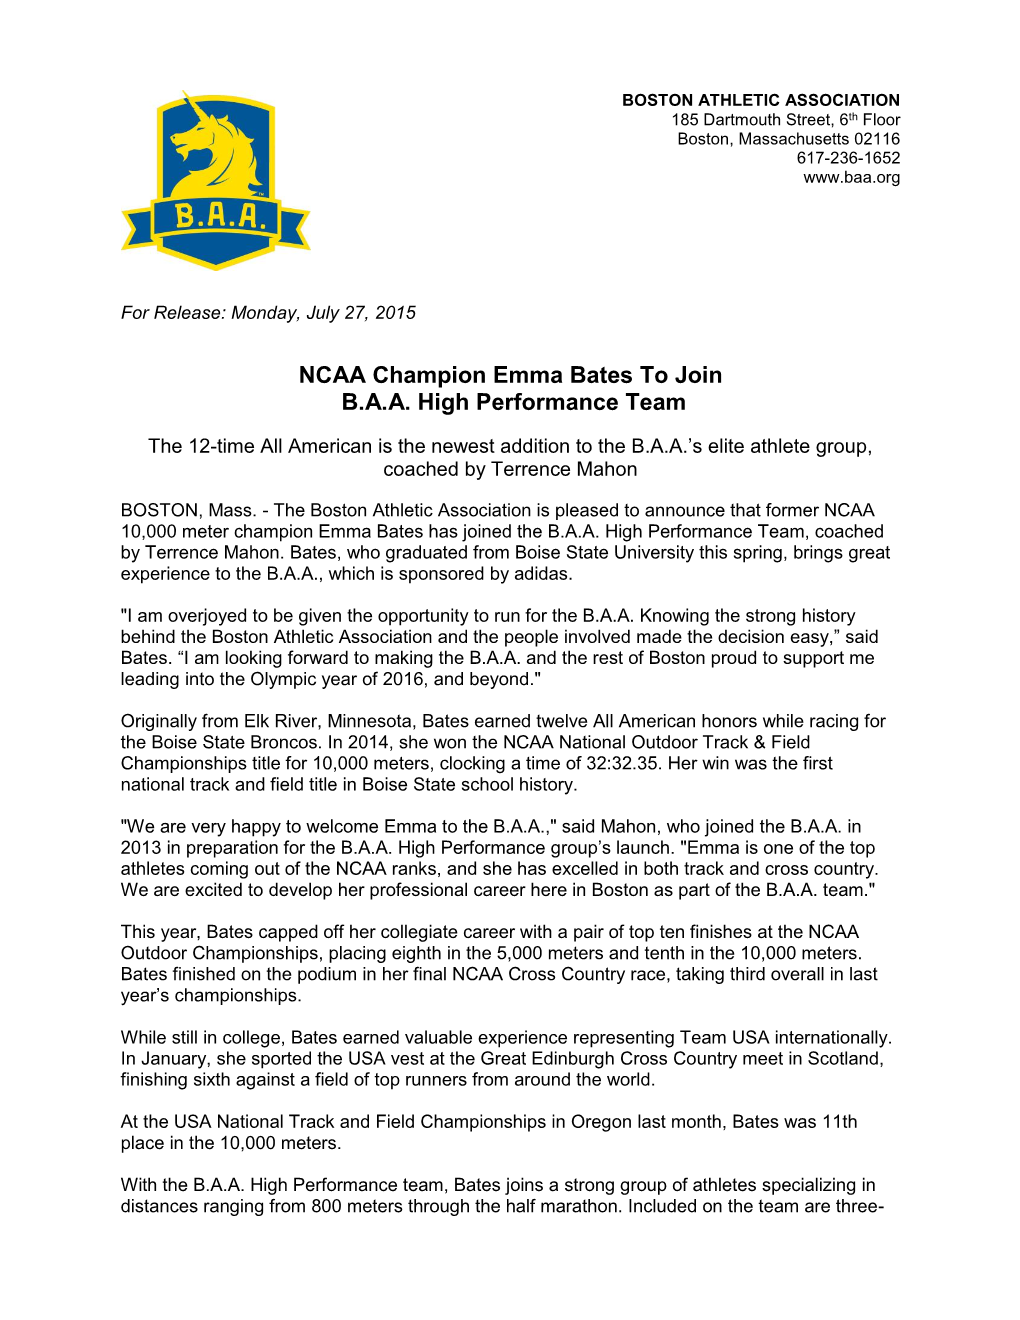 NCAA Champion Emma Bates to Join B.A.A. High Performance Team